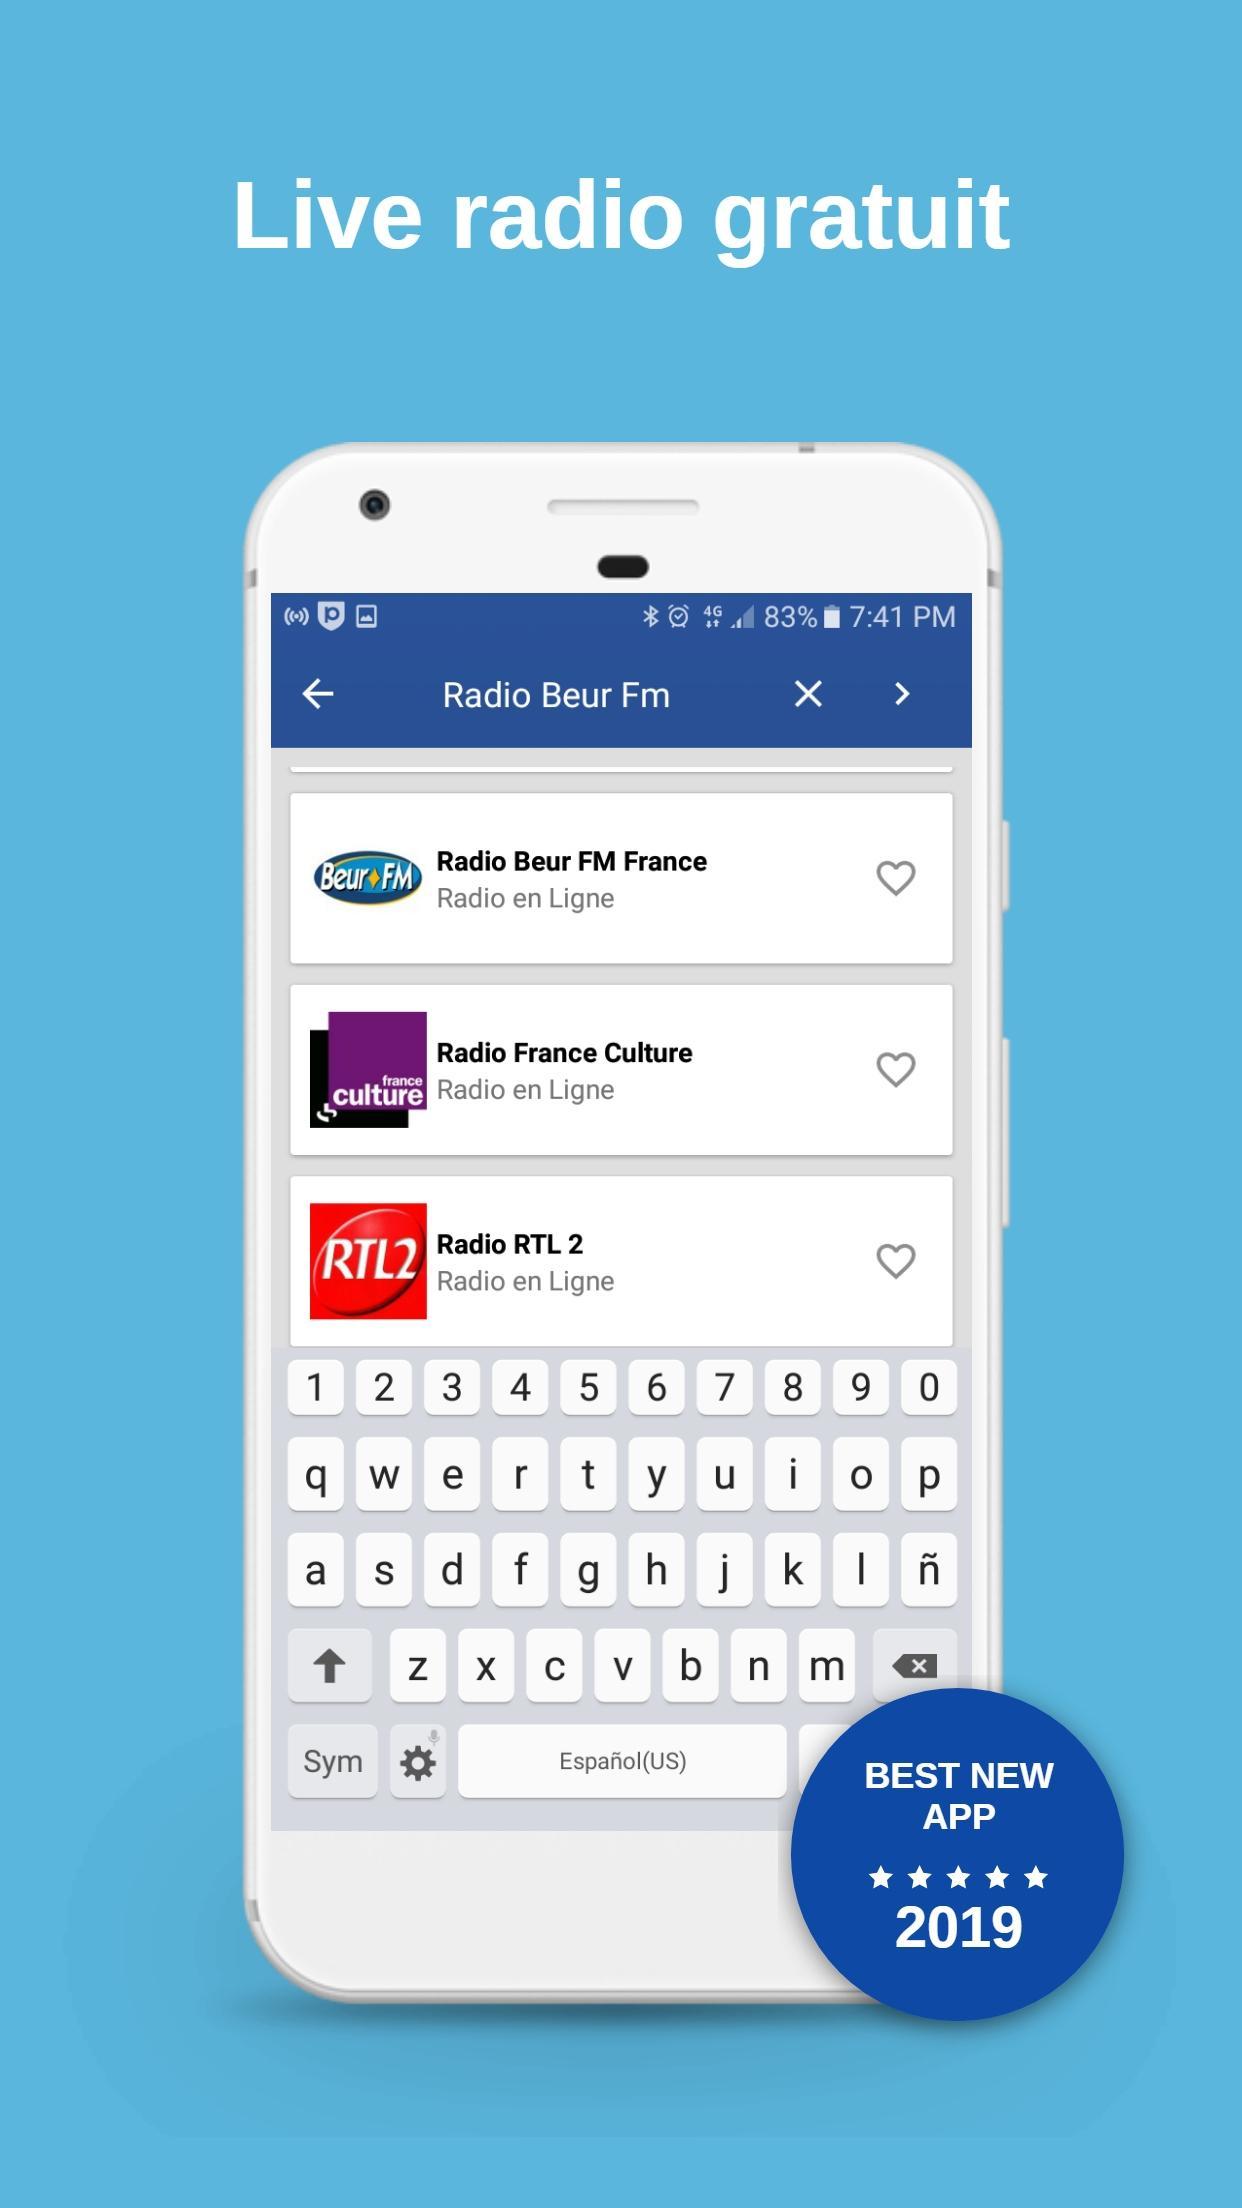 Radio Beur FM Gratuit France for Android - APK Download